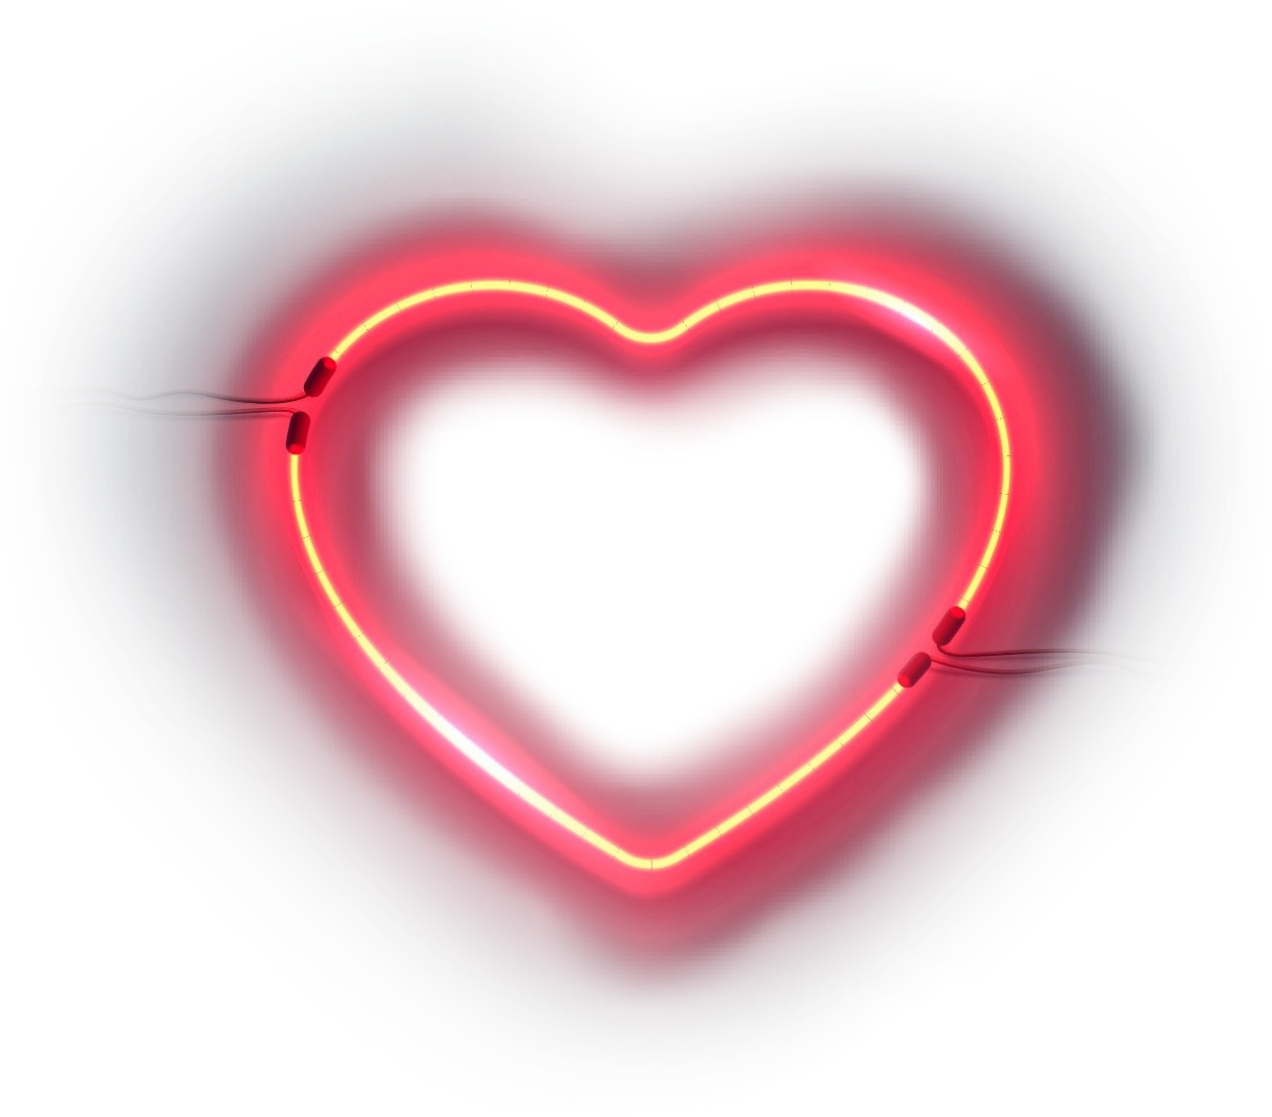 This visual is about heart redheart light neonlight heartlight freetoedit #heart...